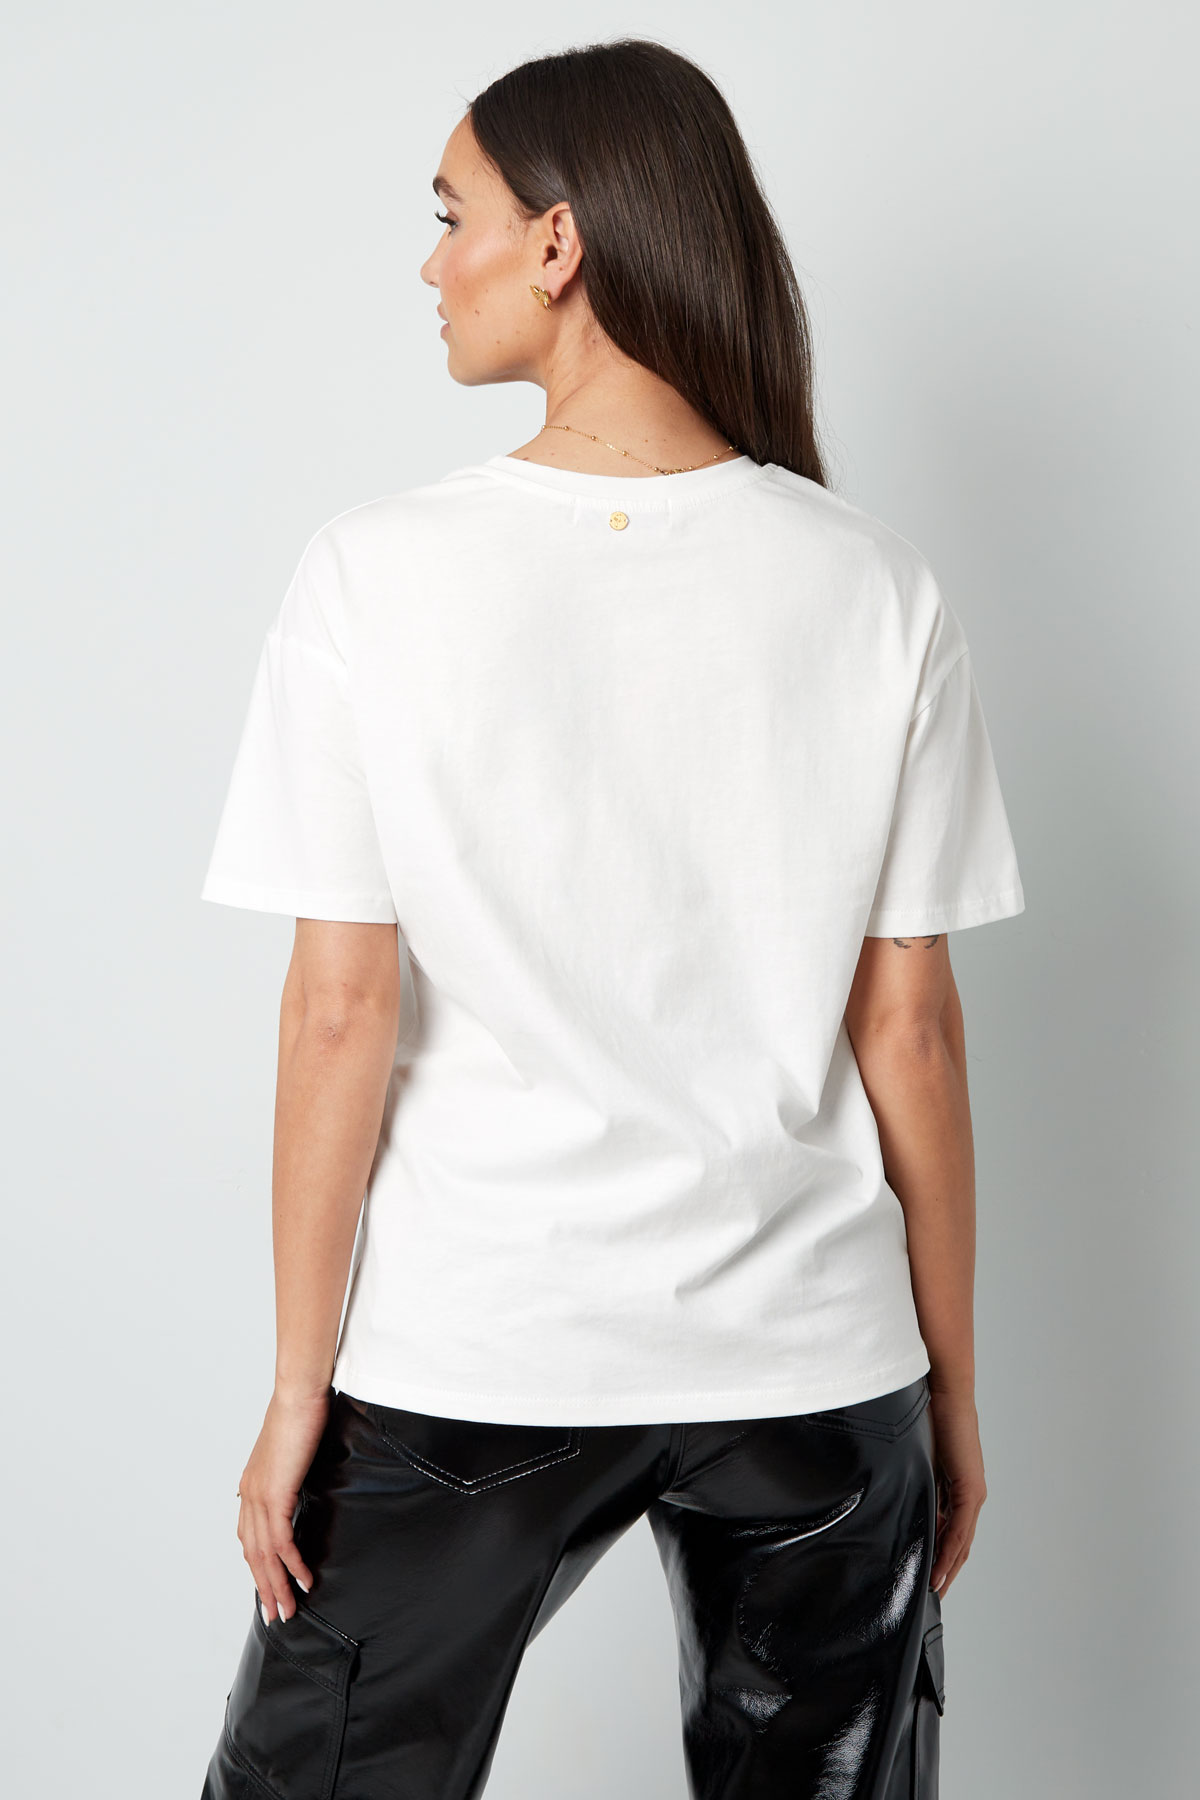 T-shirt mon amour - bianca e nera h5 Immagine9